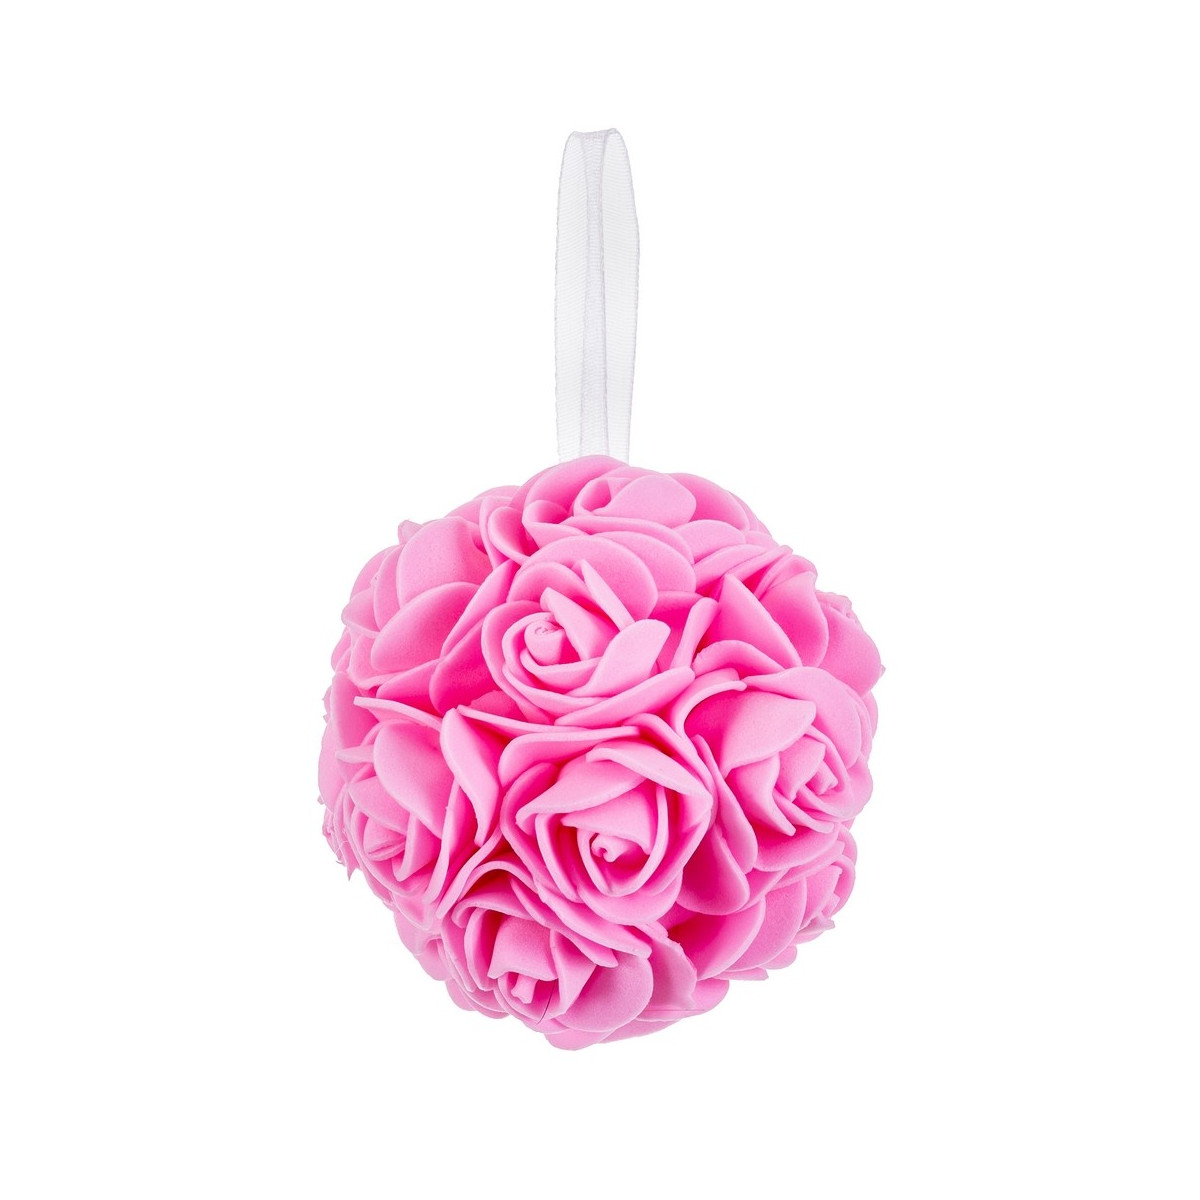 Bola de rosas cor de rosa 8 x 8 x 8 cm